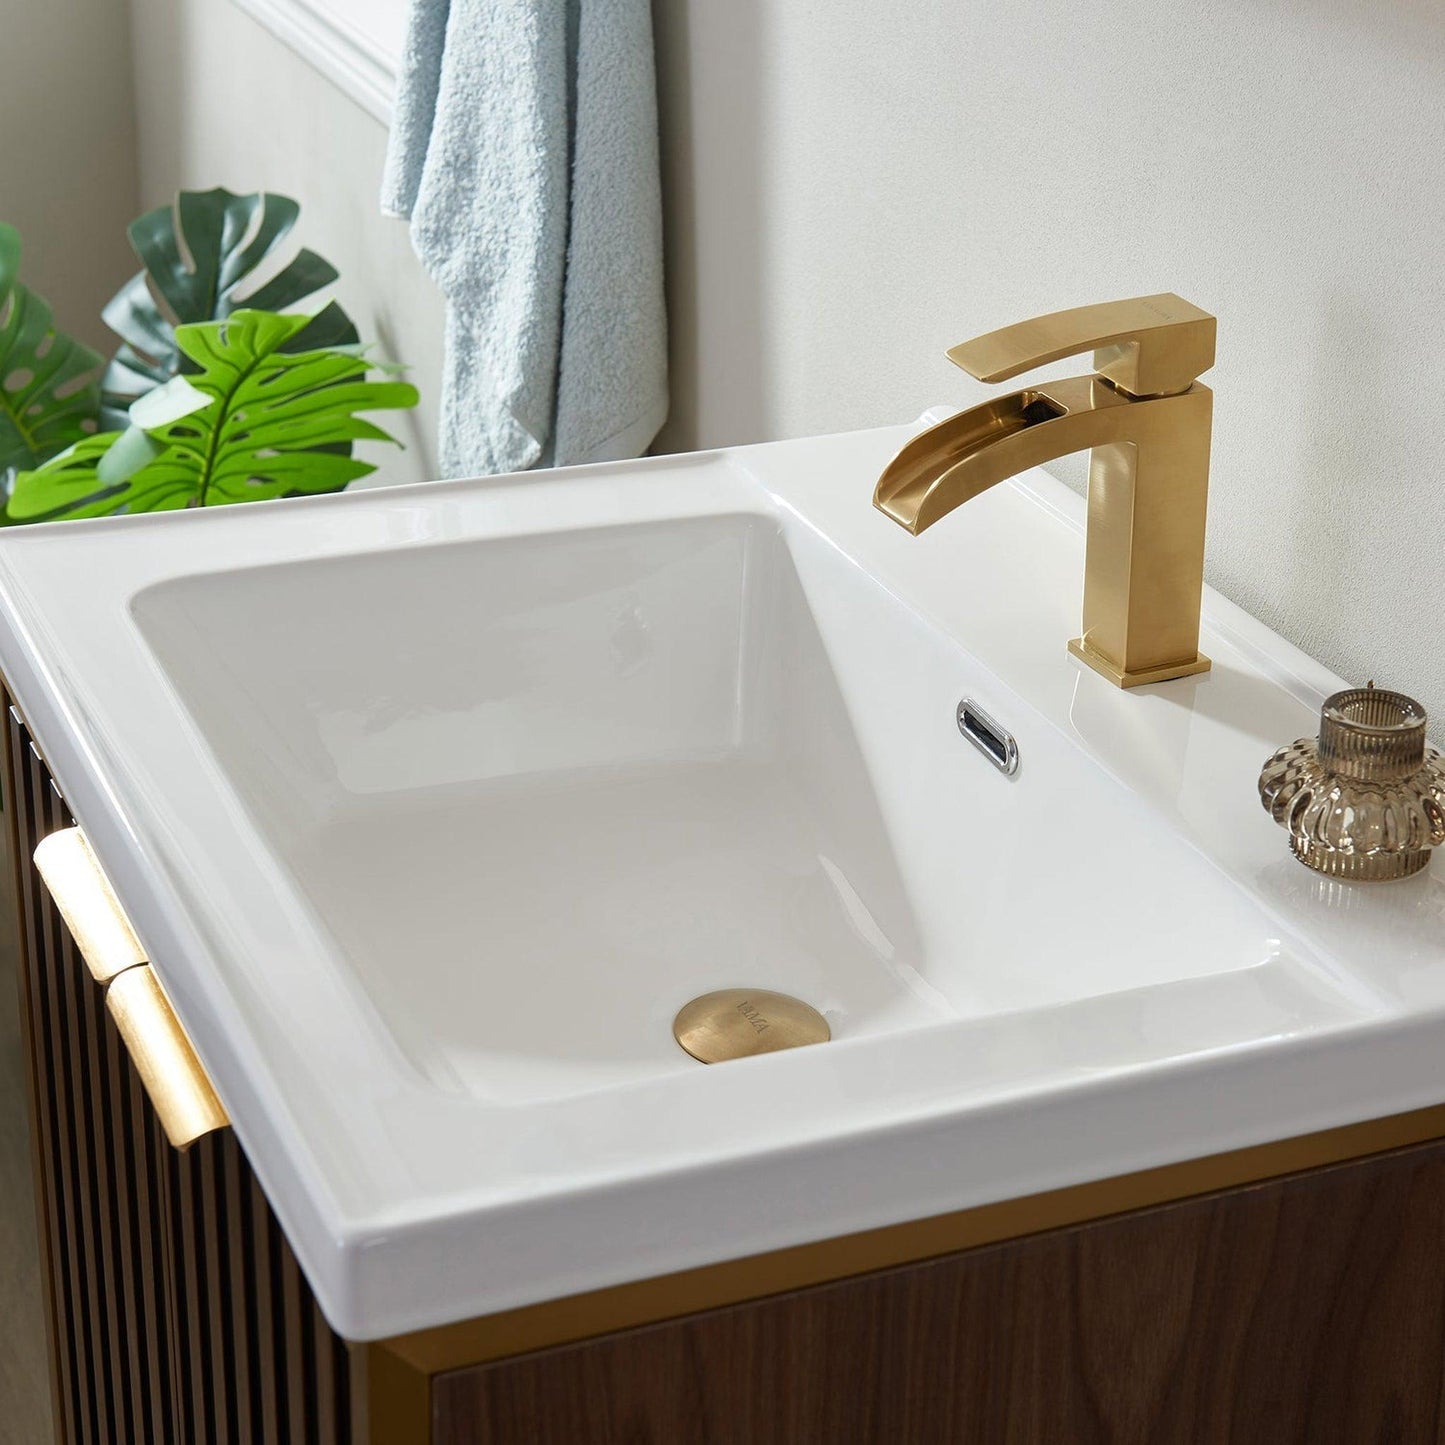 Vinnova Donostia 24" Single Vanity In North American Light Walnut Finish With Ceramic Undermount Sink With Mirror